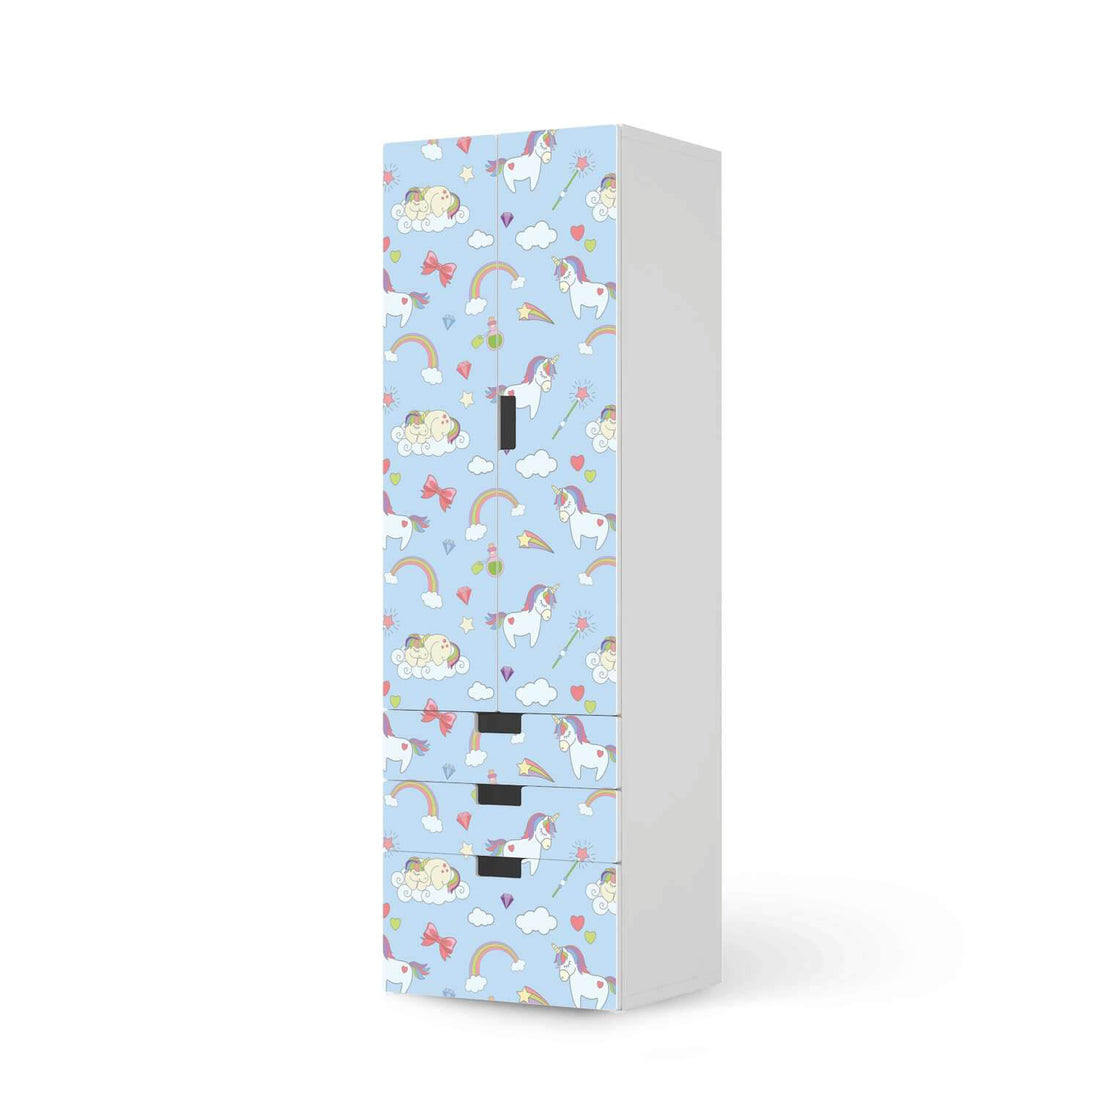 Klebefolie Rainbow Unicorn - IKEA Stuva kombiniert - 3 Schubladen und 2 große Türen (Kombination 1)  - weiss